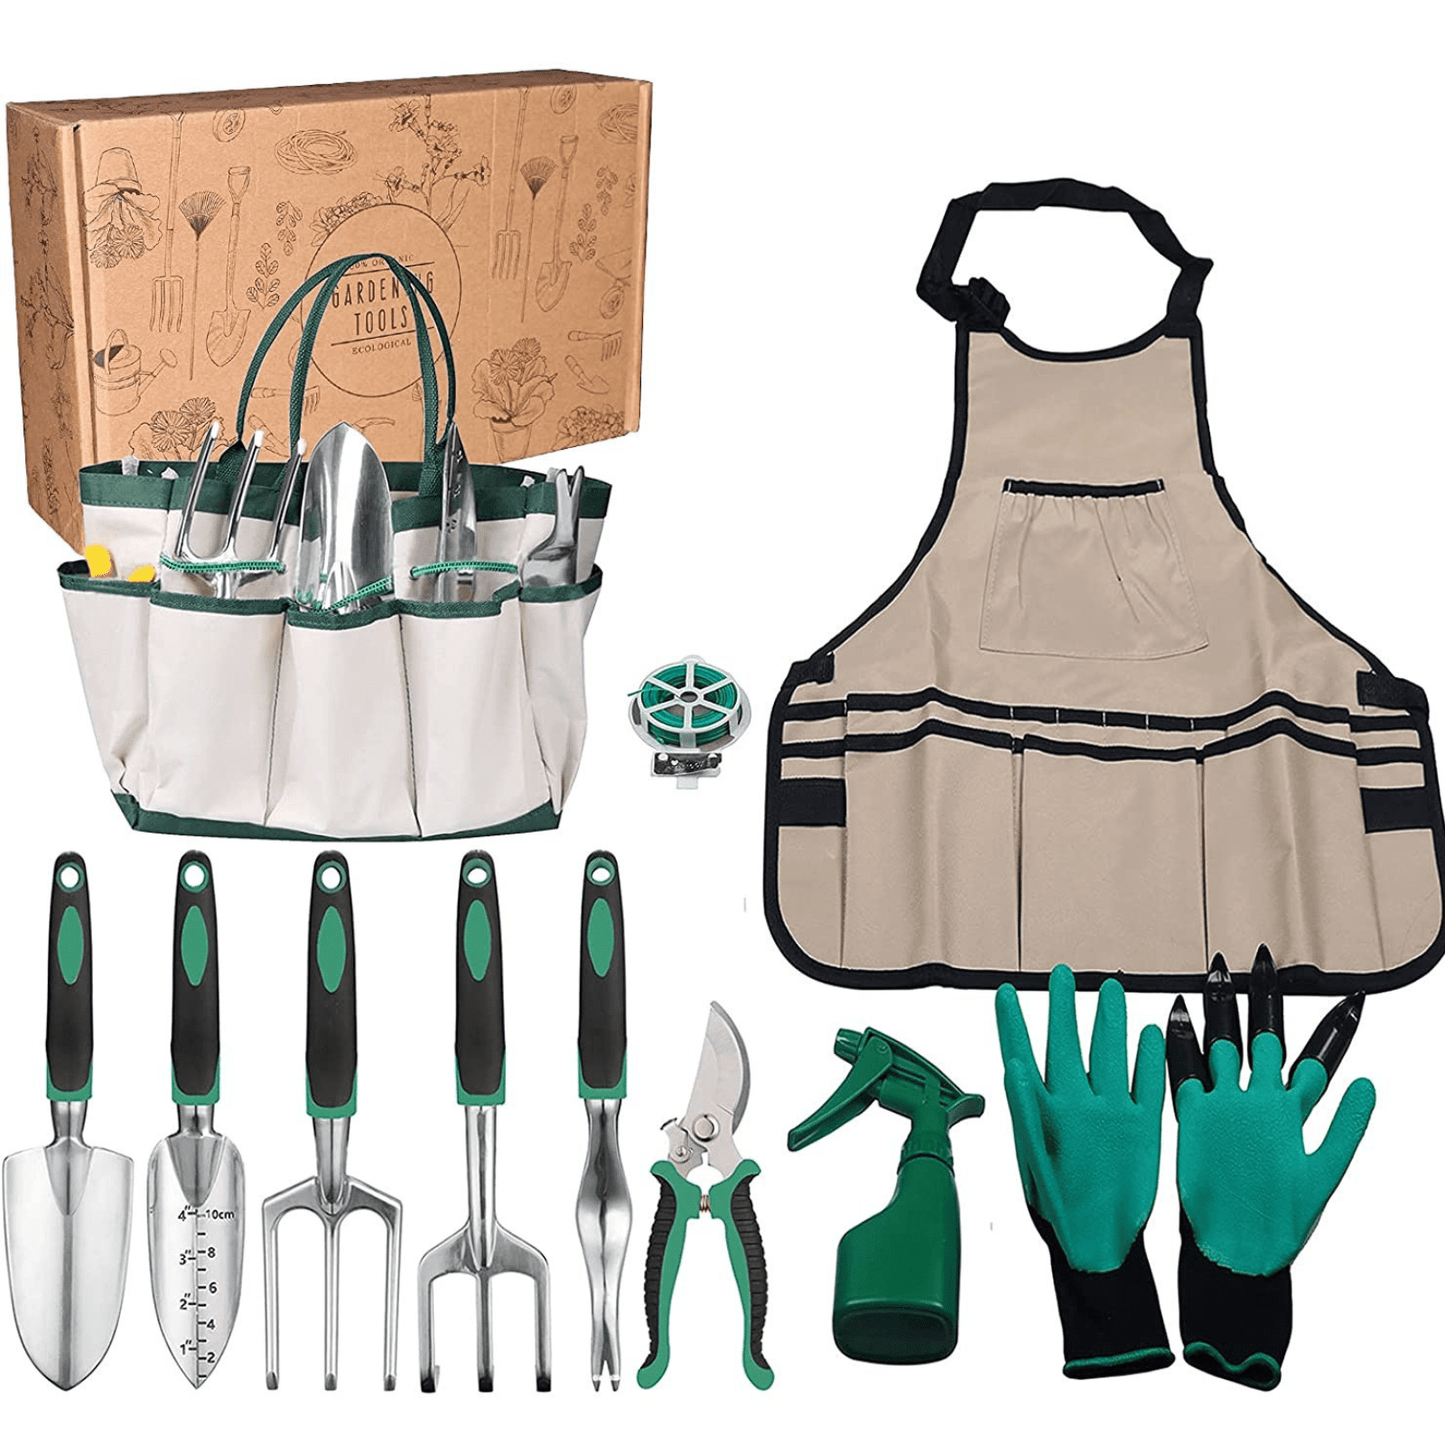 Kit de jardinagem profissional completo - 11 ferramentas